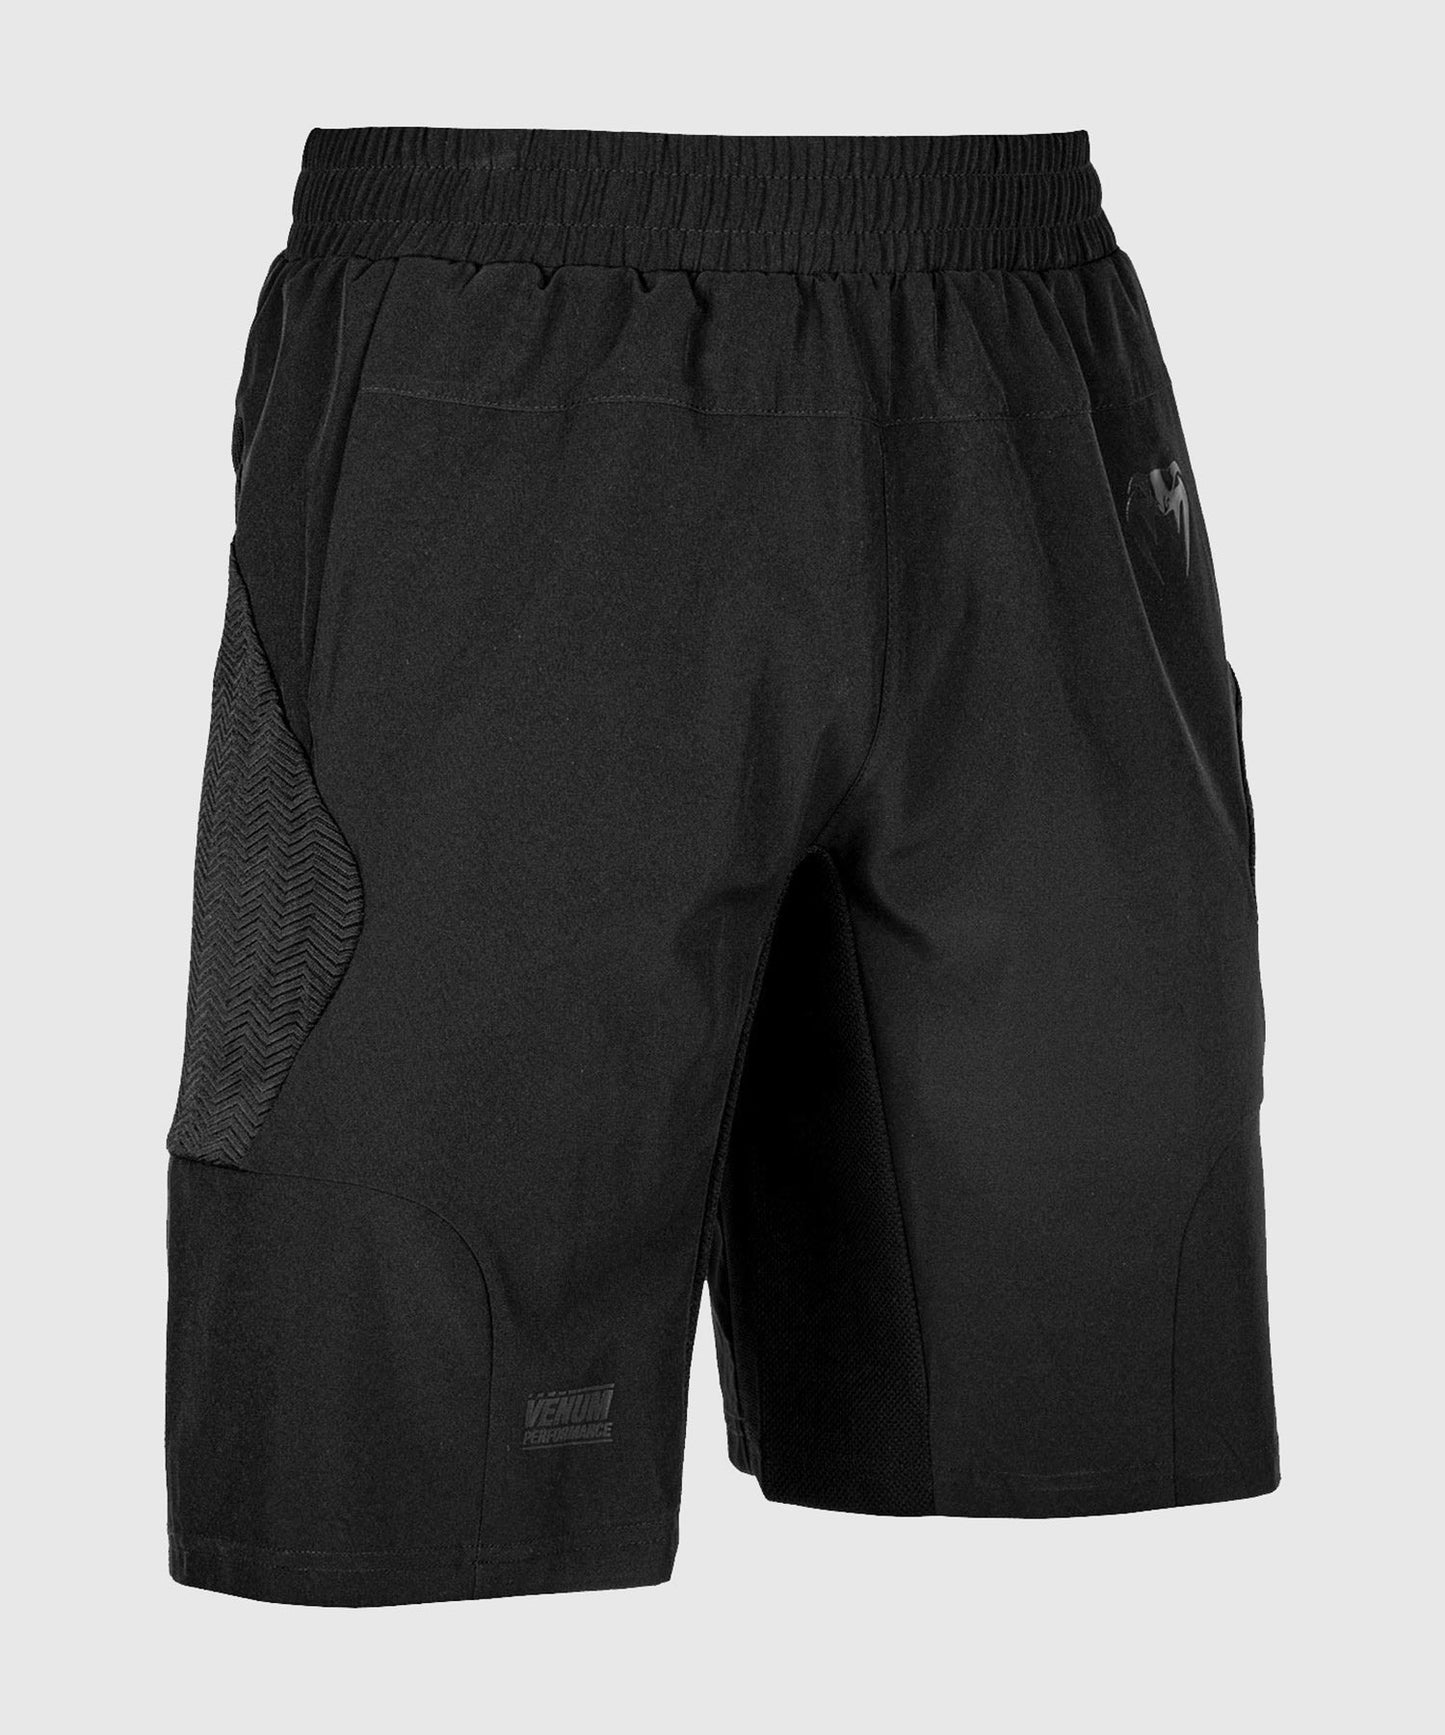 Venum G-Fit Training Shorts - Black